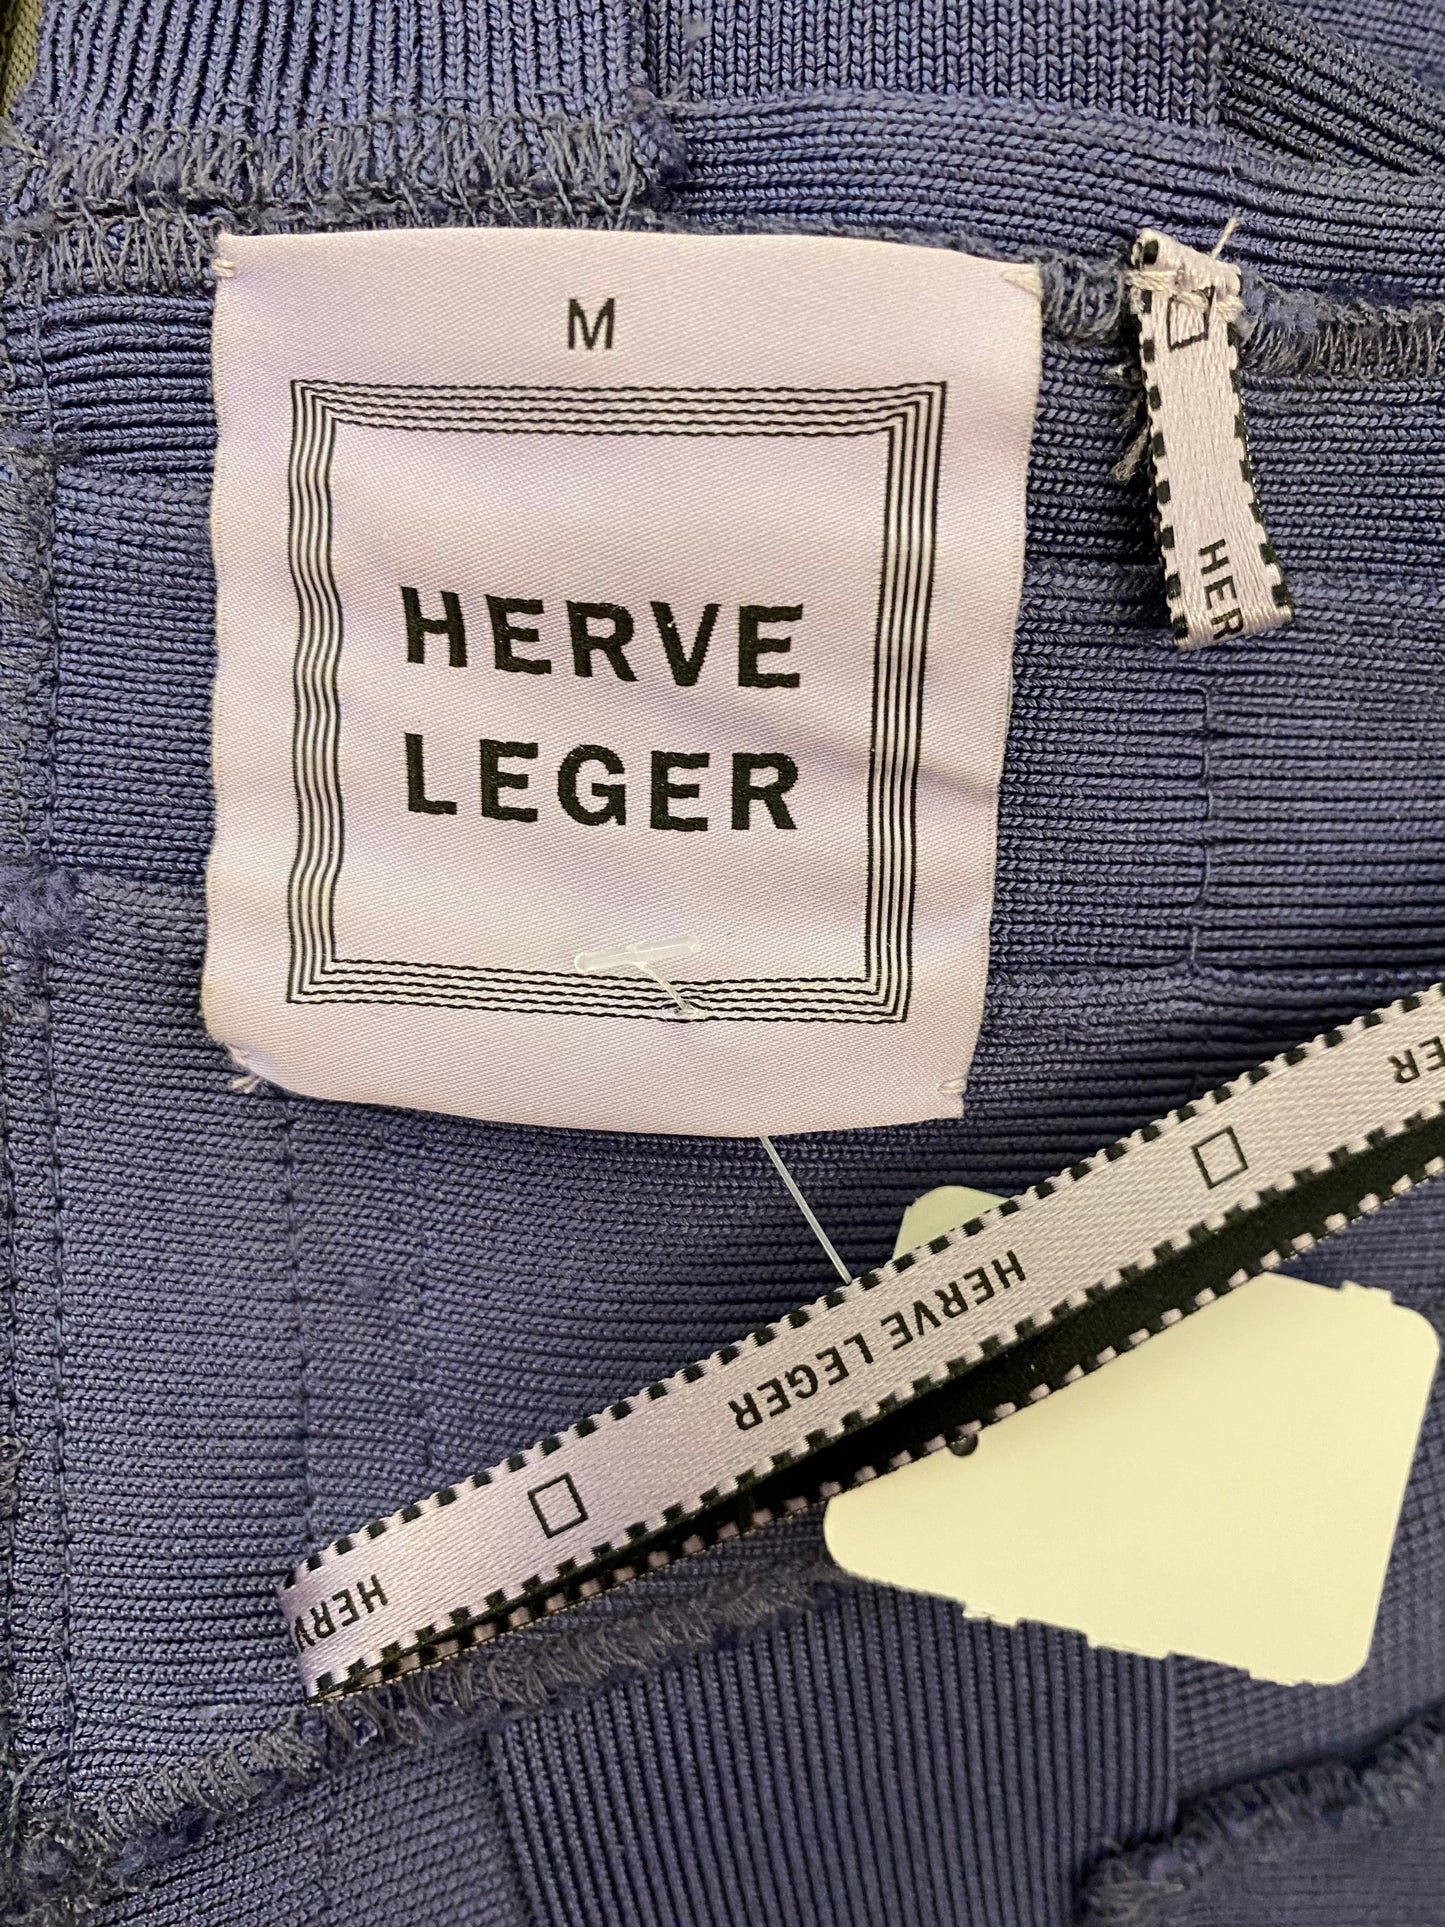 HERVE LEGER Bandage Dress Size M